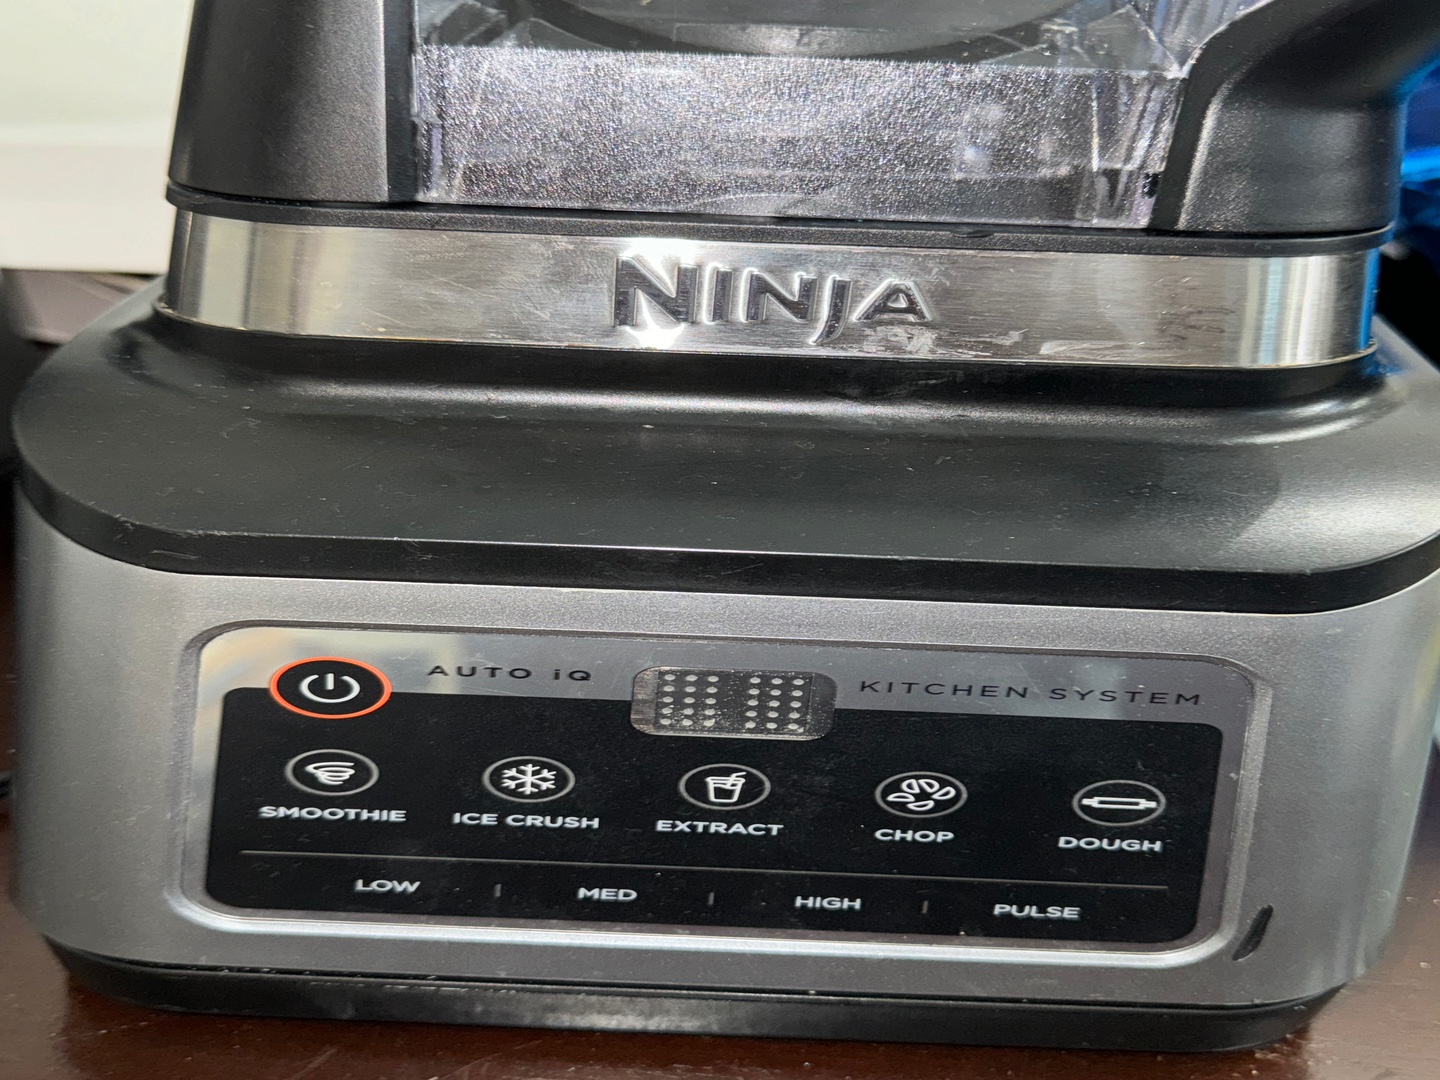 electrodomesticos - Licuadora Ninja IQ Kitchen System 1,200 wats totalmente nuevas  3